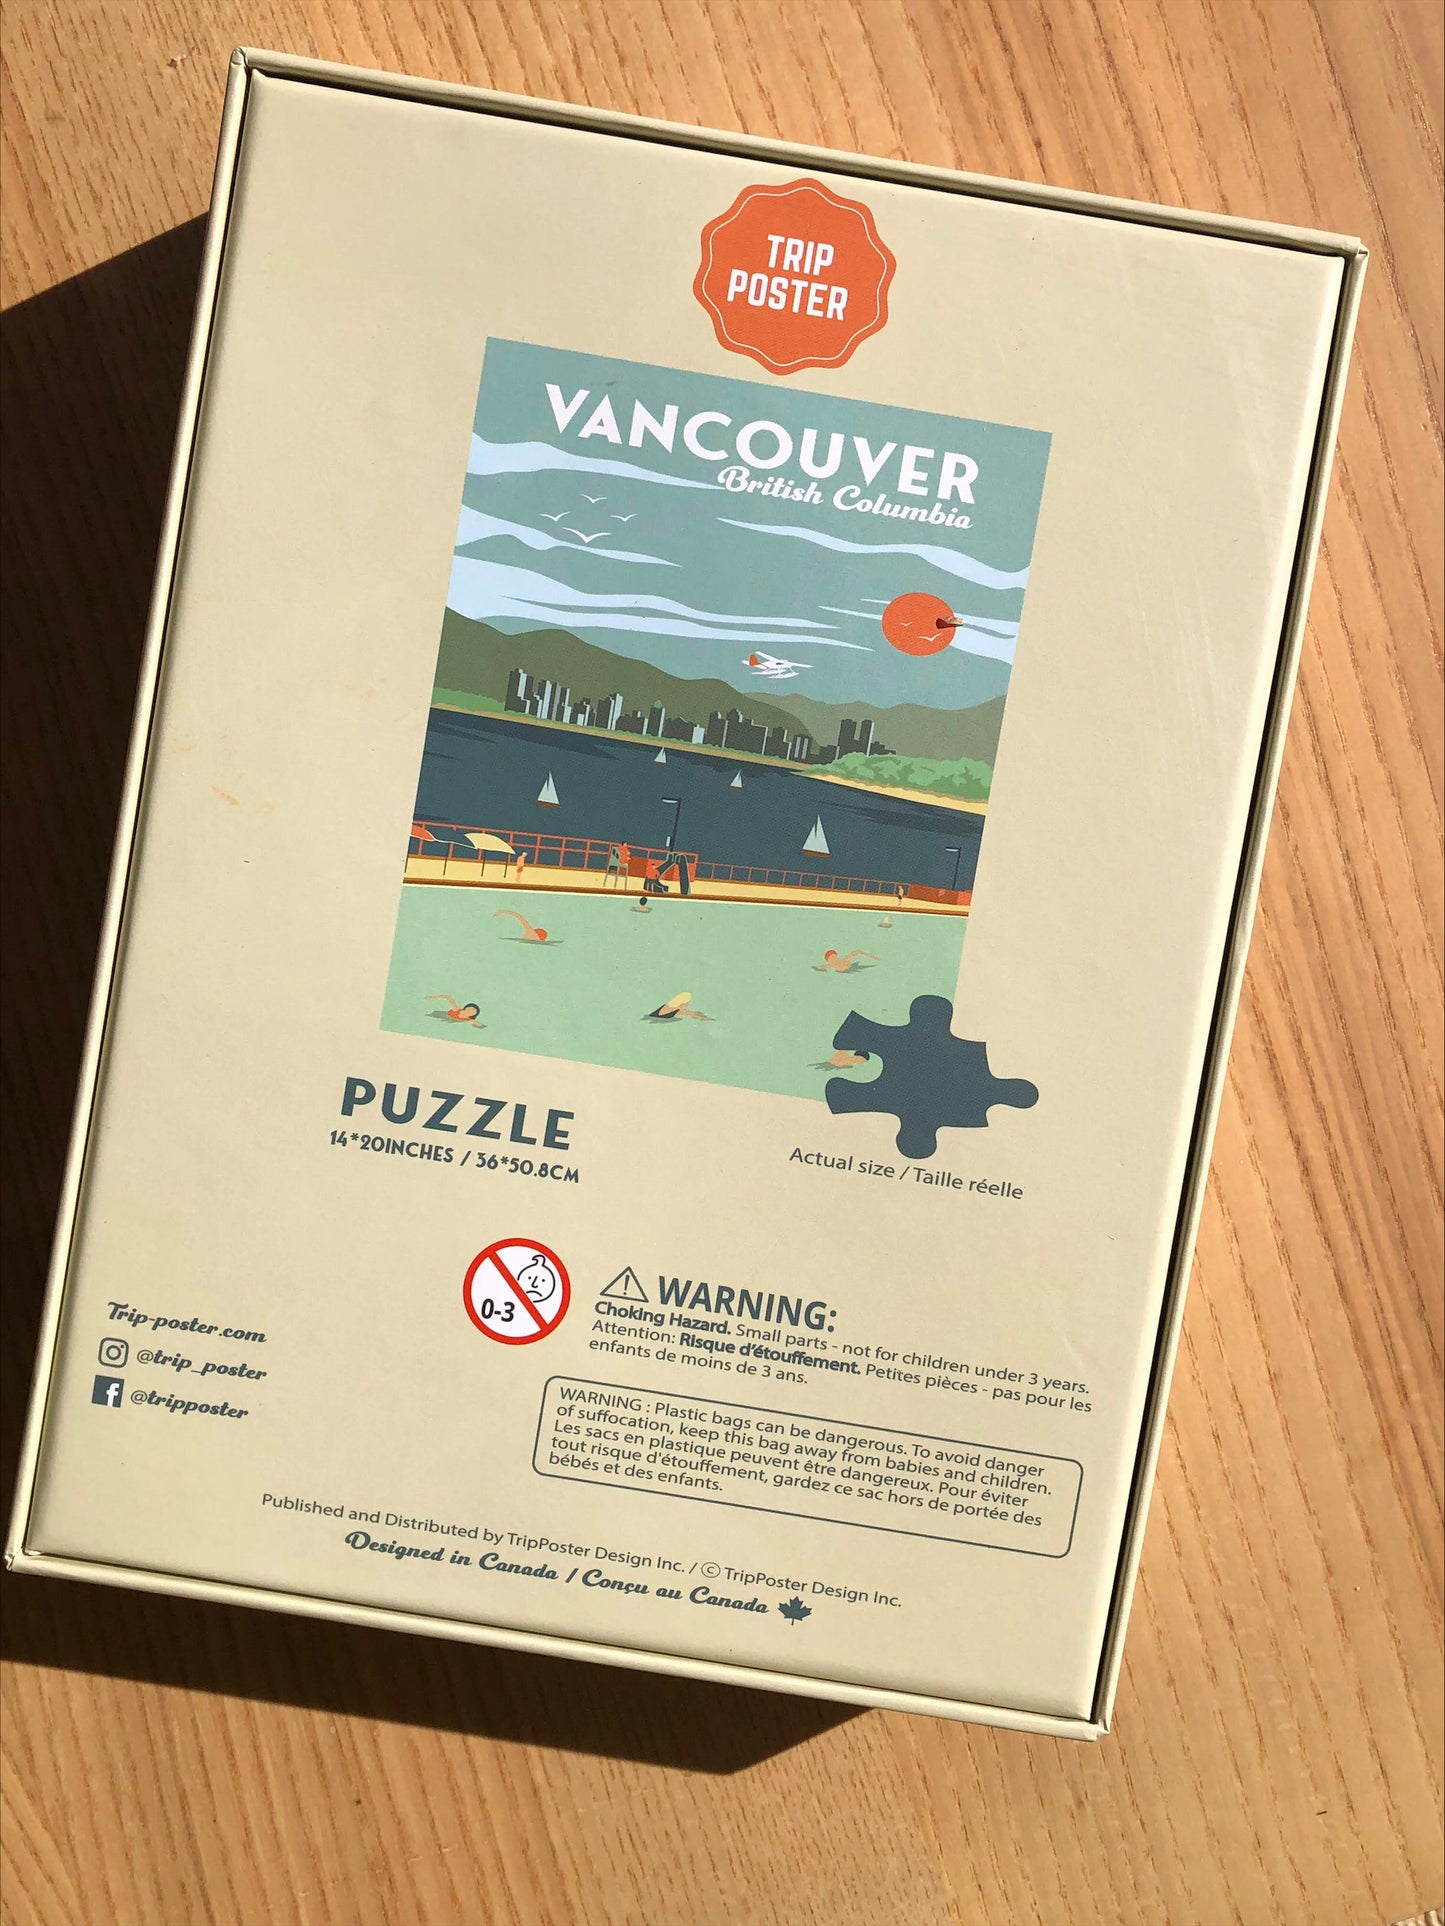 PUZZLE - Vancouver or Canada